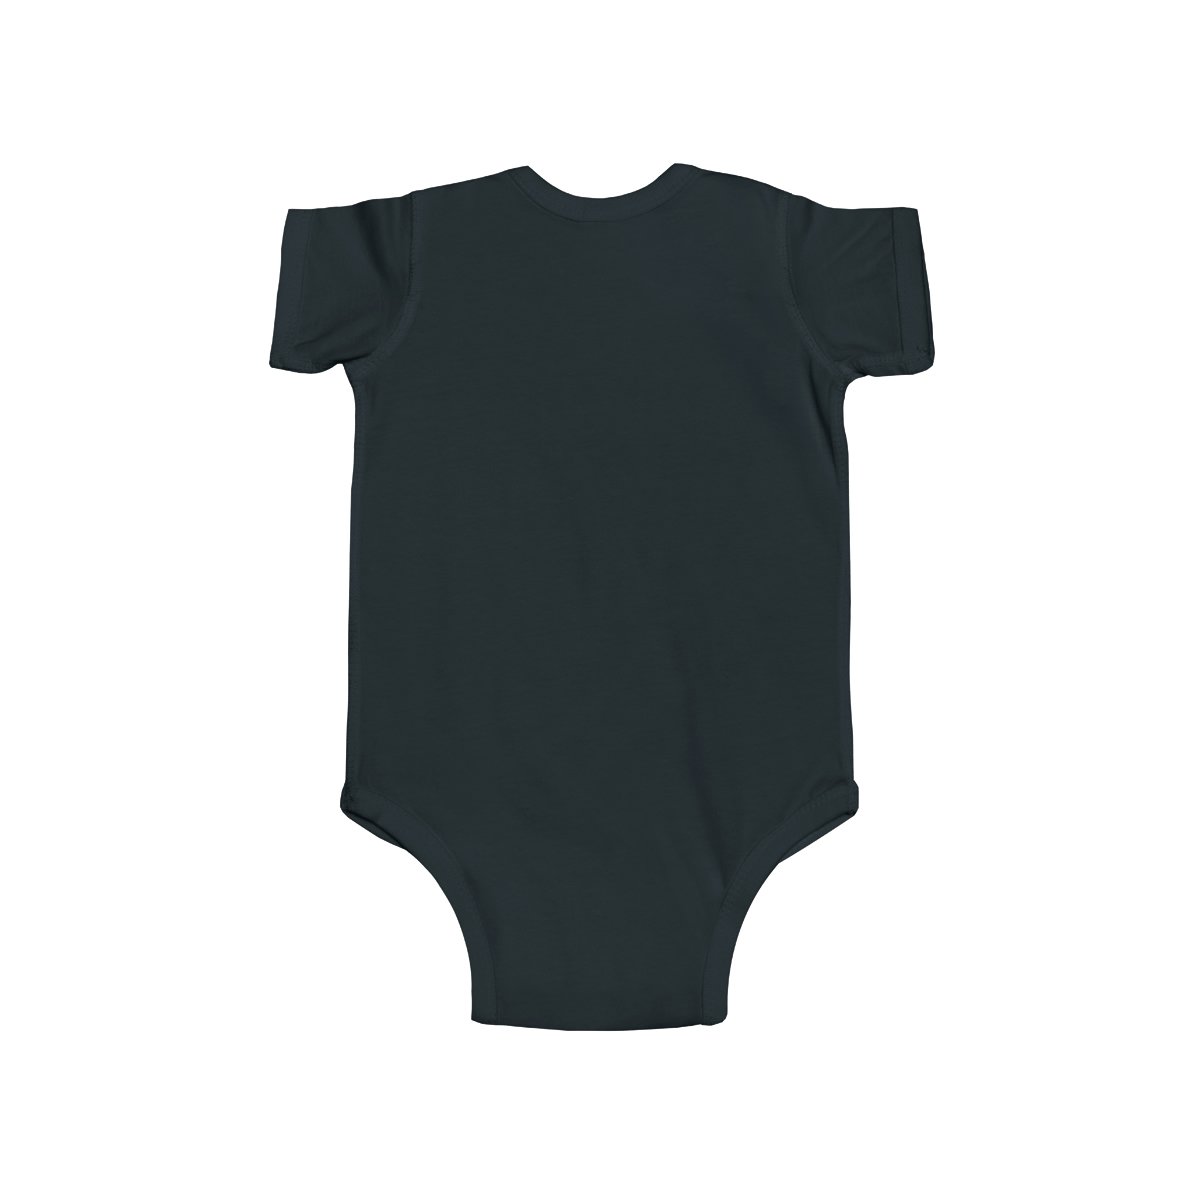 Sanctuary International – PB&J Infant Fine Jersey Bodysuit